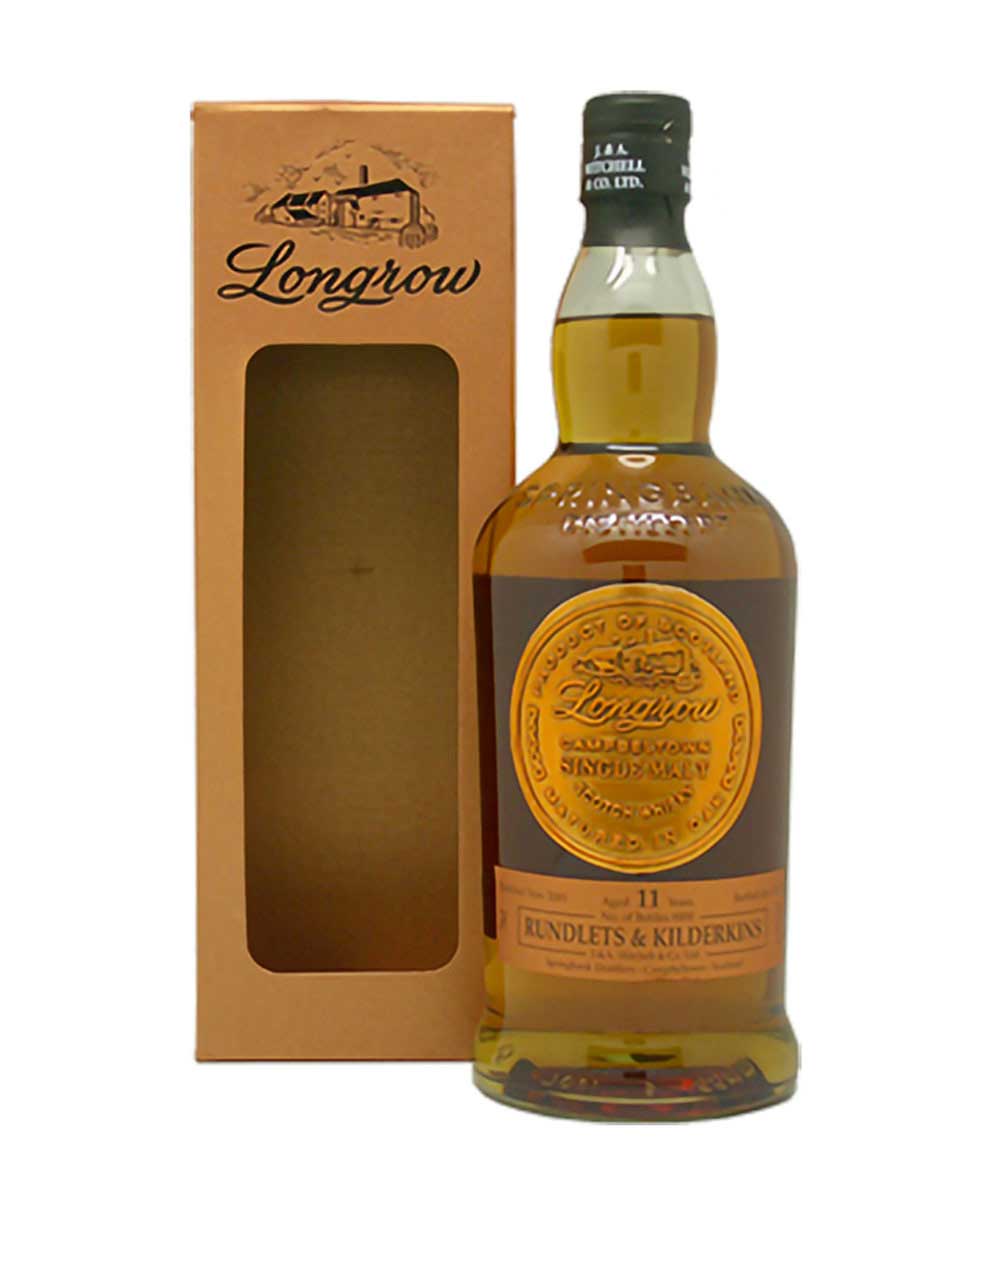 Longrow Rundlets & Kilderkins Single Malt Scotch Whisky